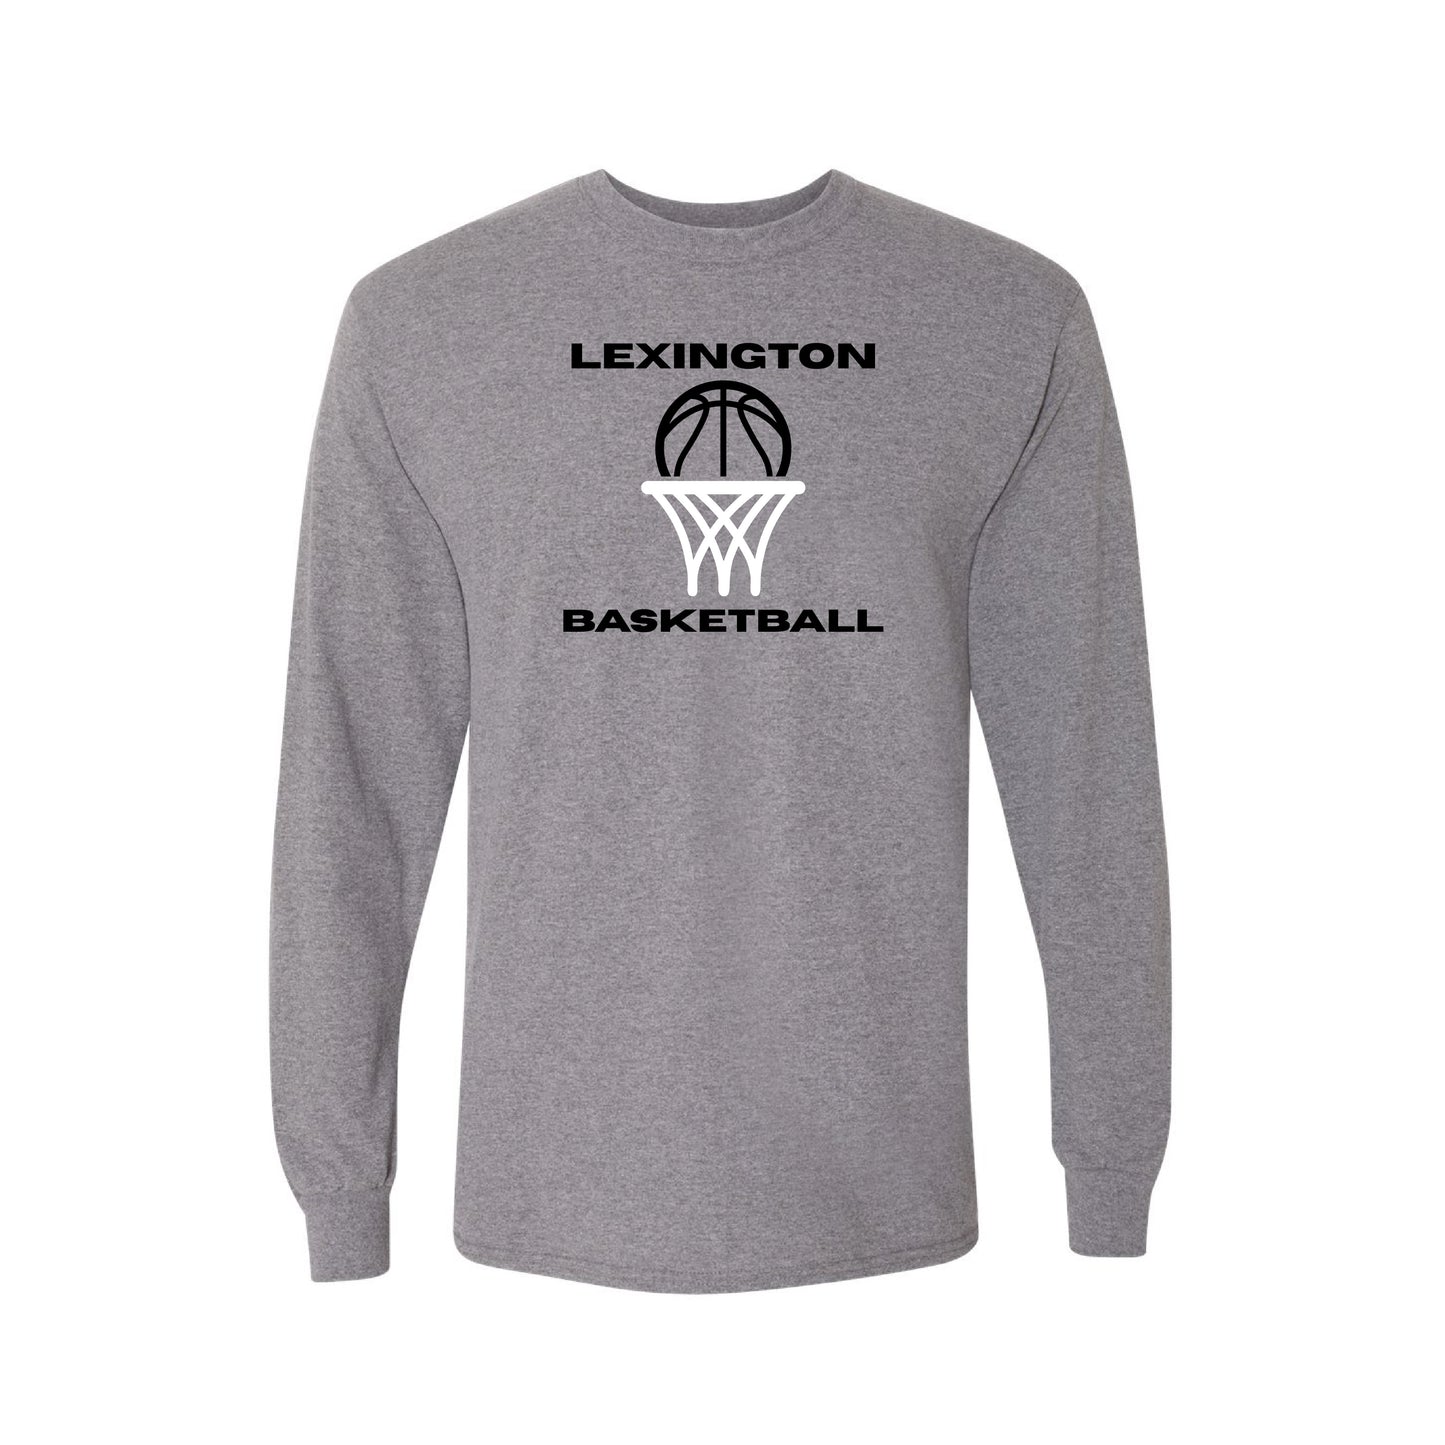 Lex Boys Basketball | Gildan DryBlend 50 Cotton/50 Poly Long Sleeve T-Shirt